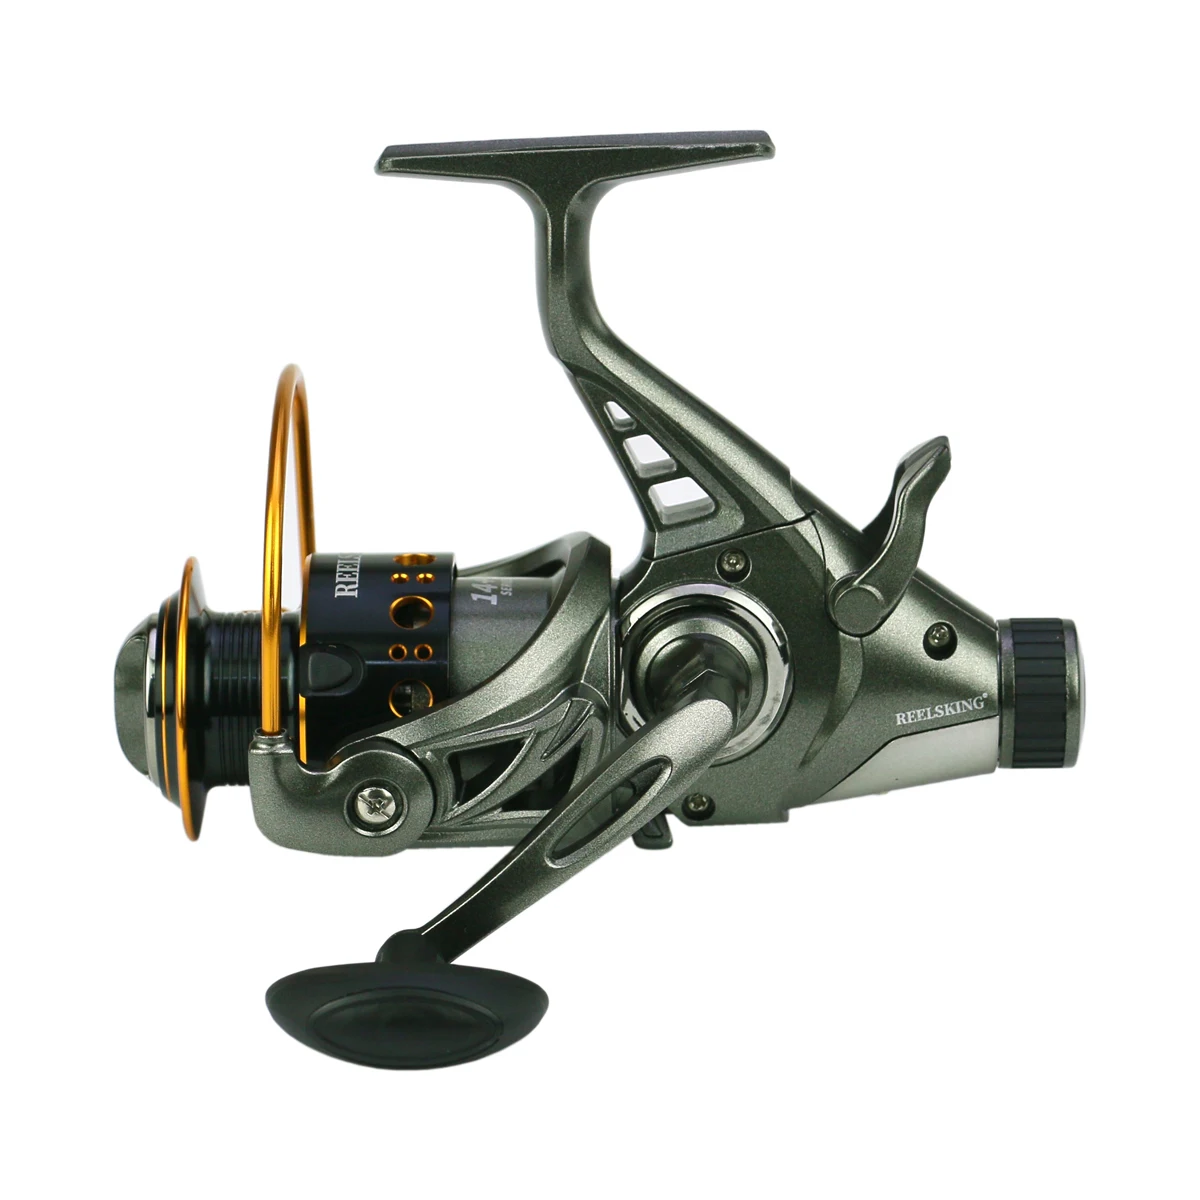 

Metal Spool Double Brake Reel Spinning Reel Gear Ratio 4.9:1 Reels carretilhas de pesca baitcasting reel fishing accessories